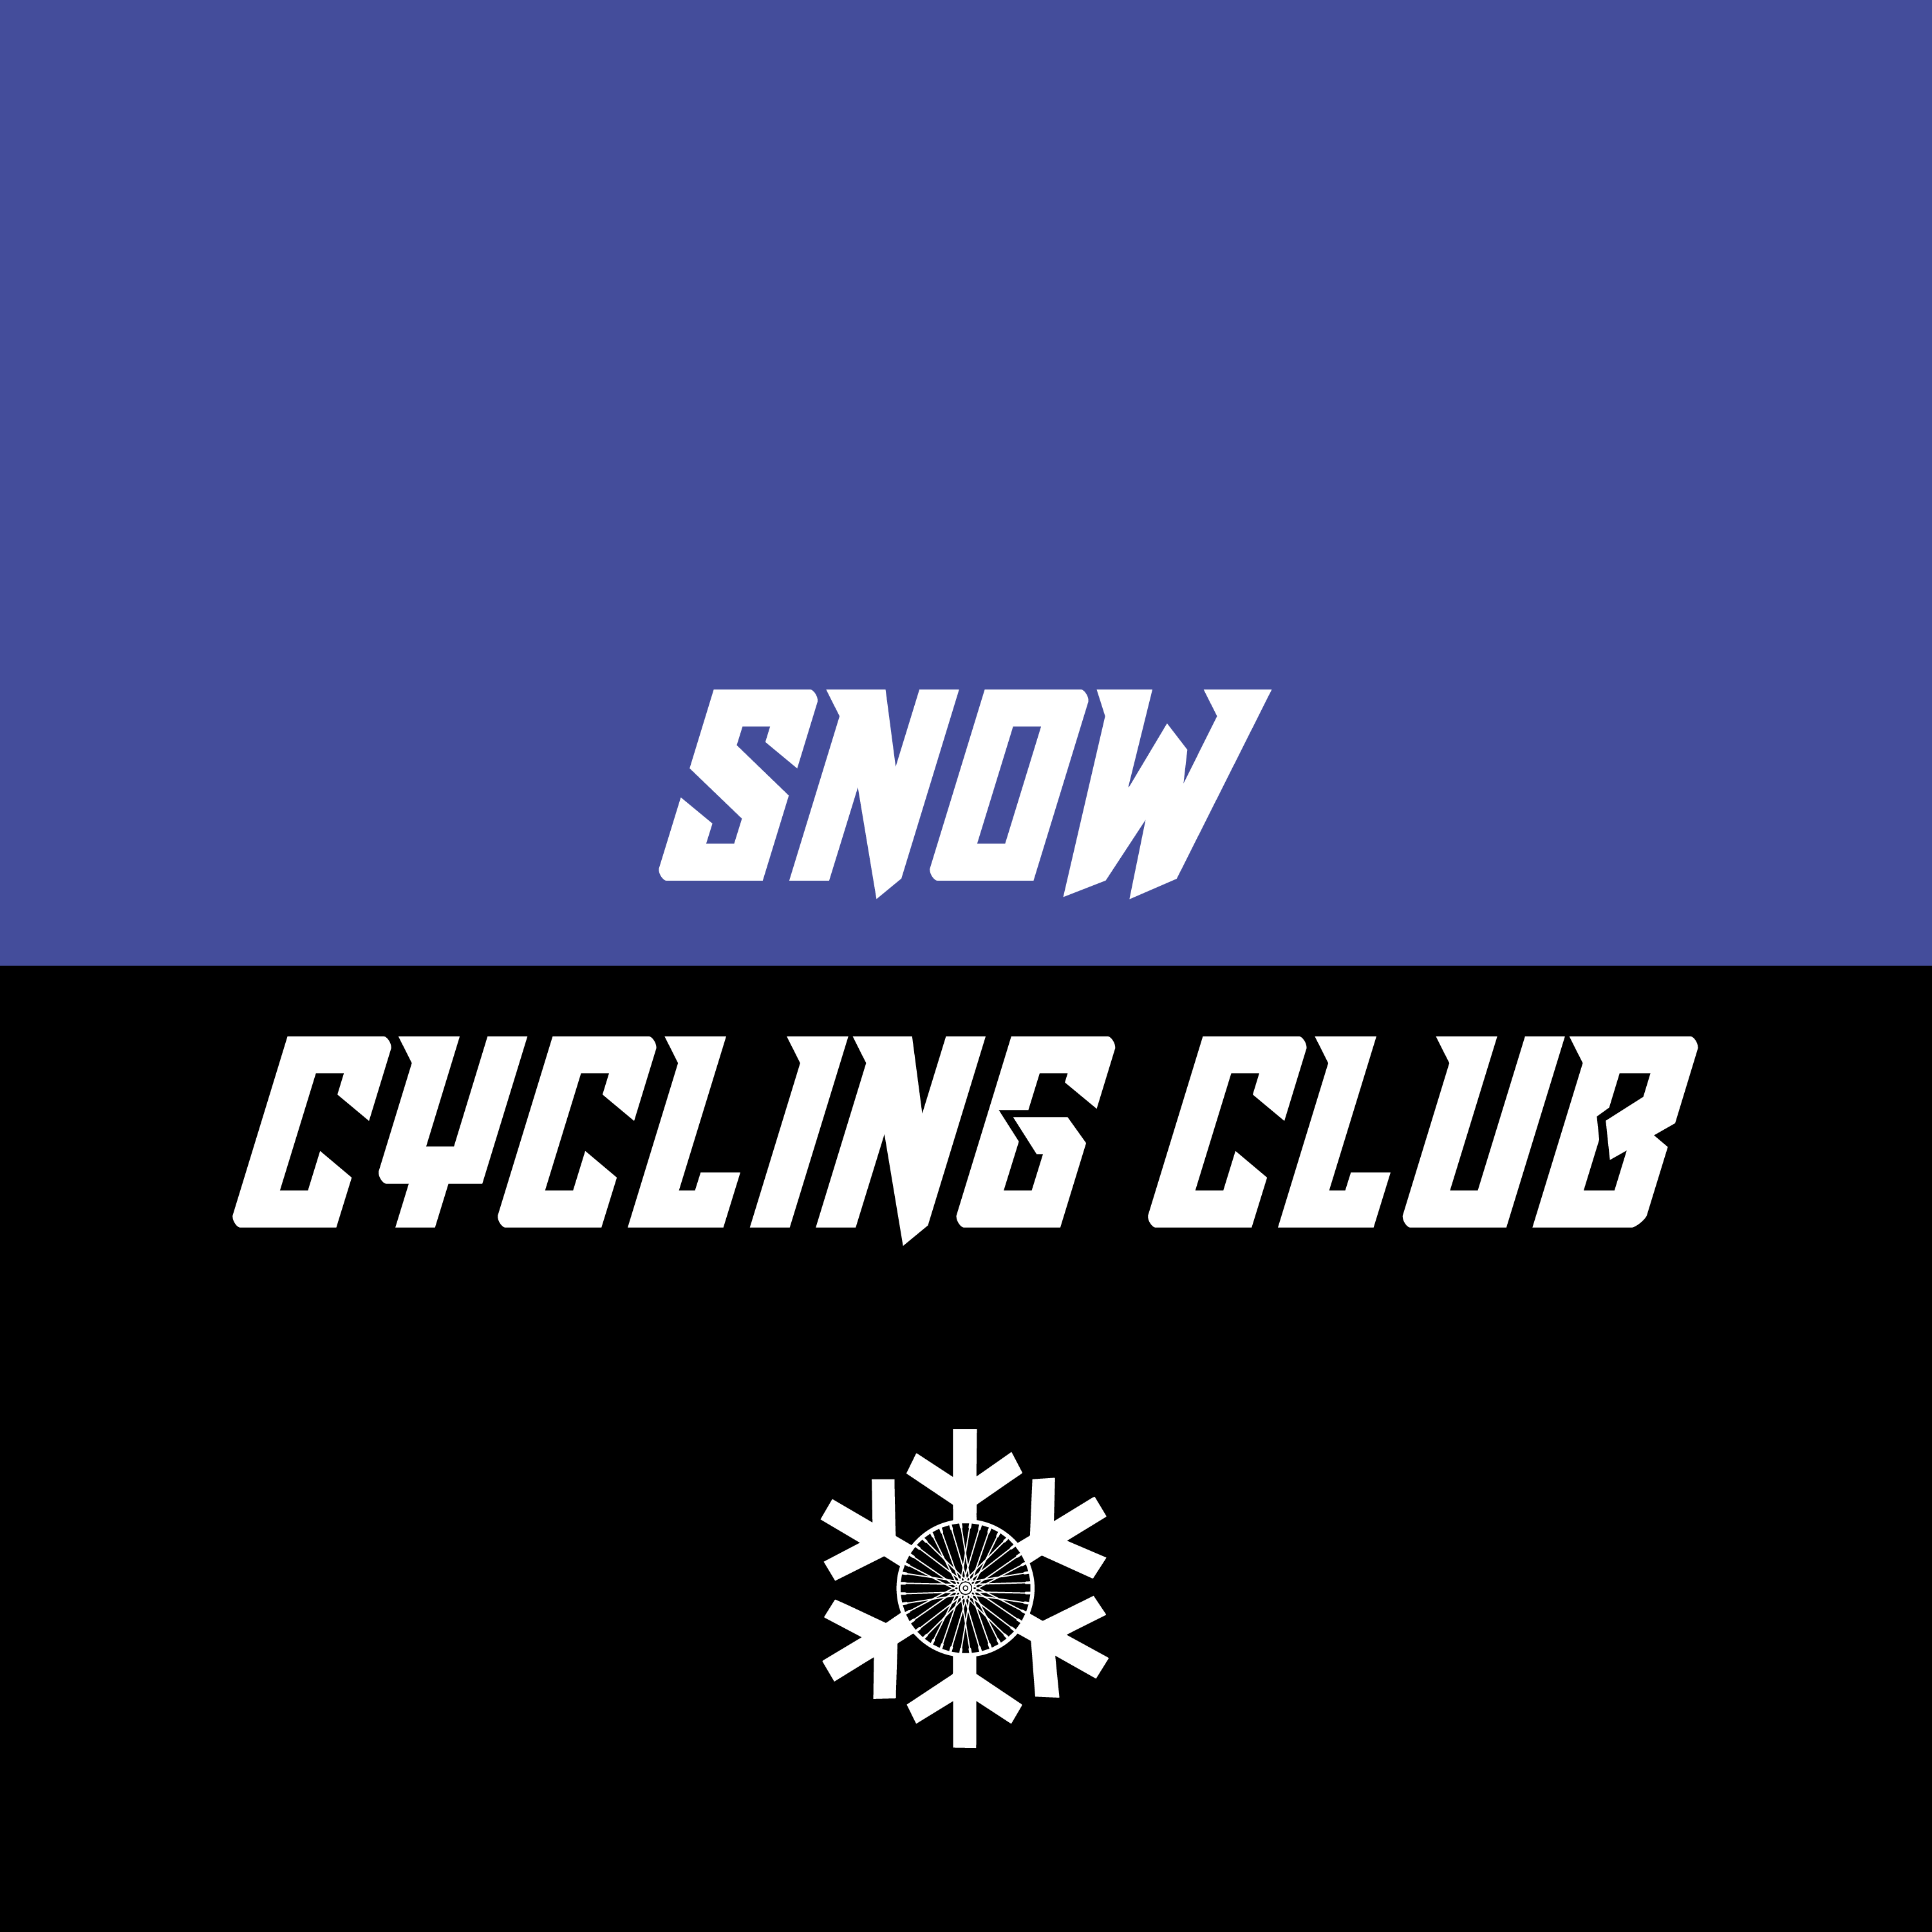 Club Image for SNOW CC